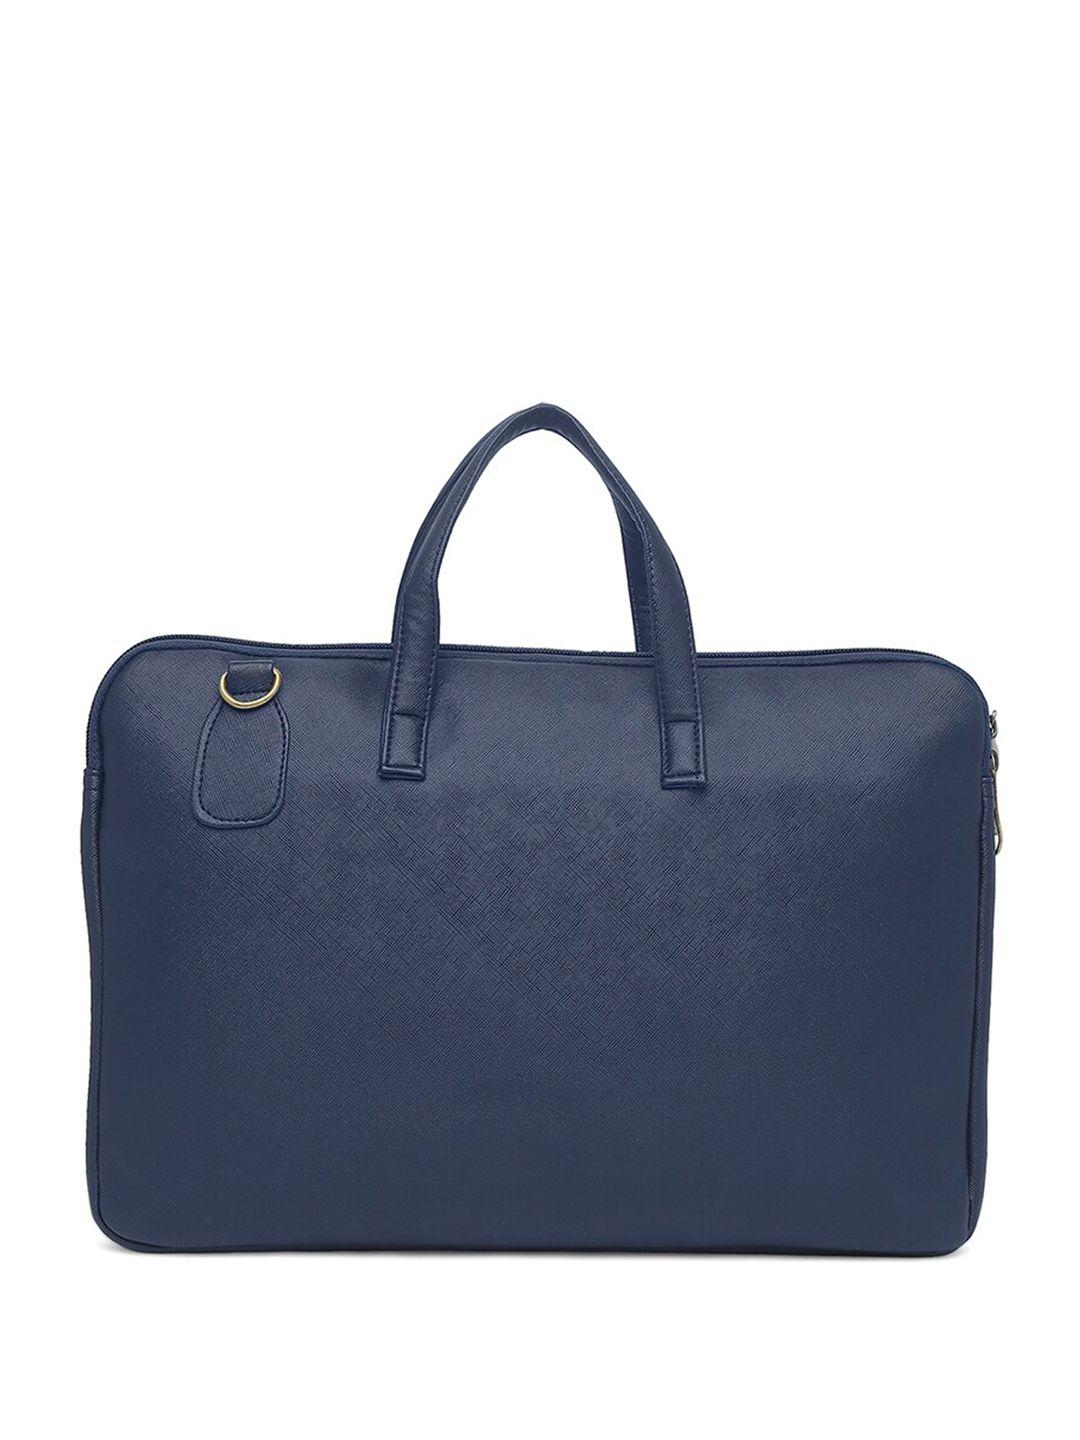 mboss unisex blue pu laptop bag